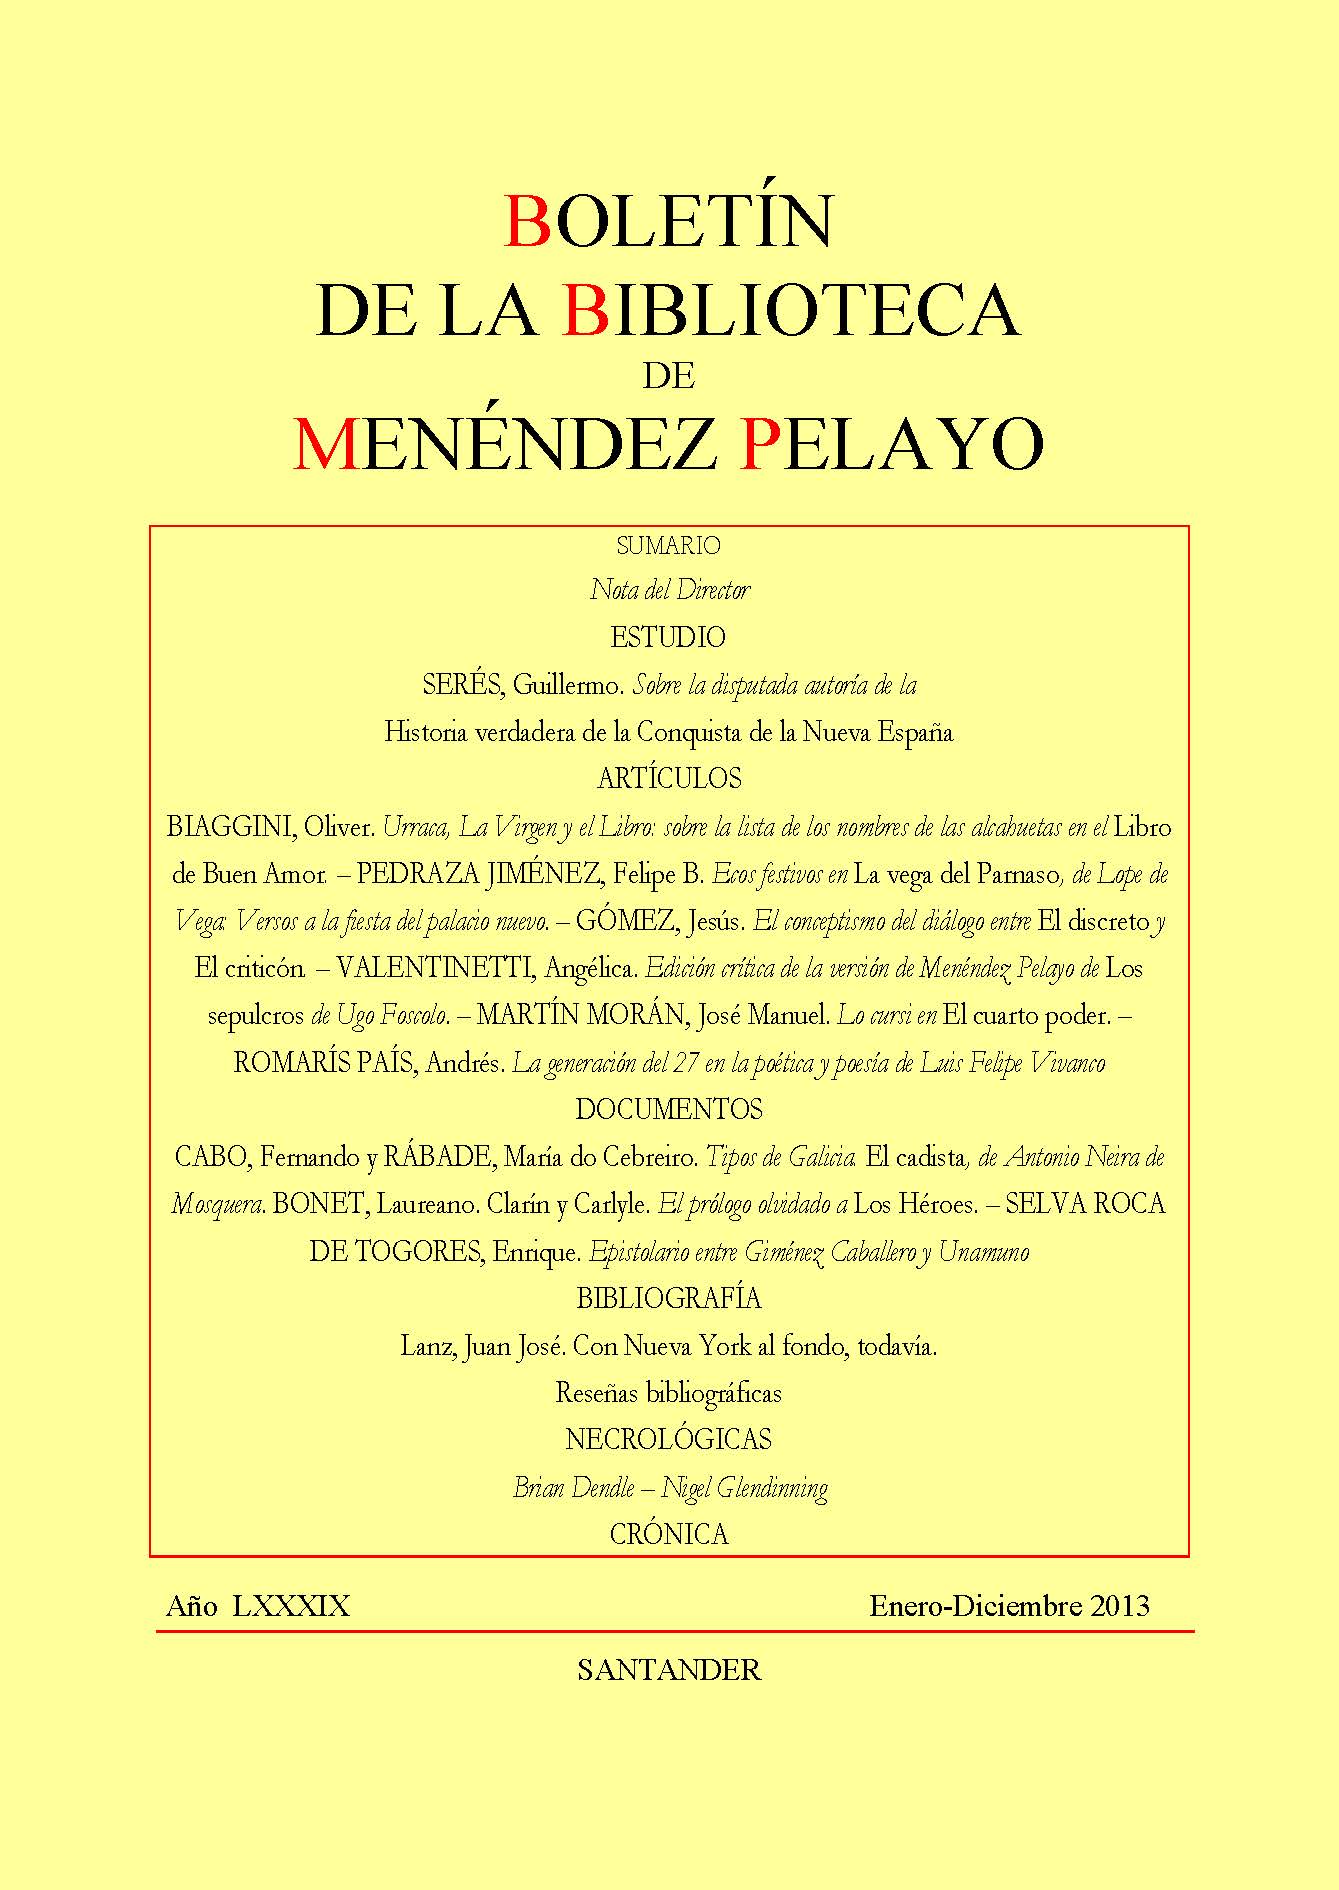 					Ver Vol. 89 Núm. único (2013): Boletín de la Biblioteca de Menéndez Pelayo. LXXXIX (2013)
				